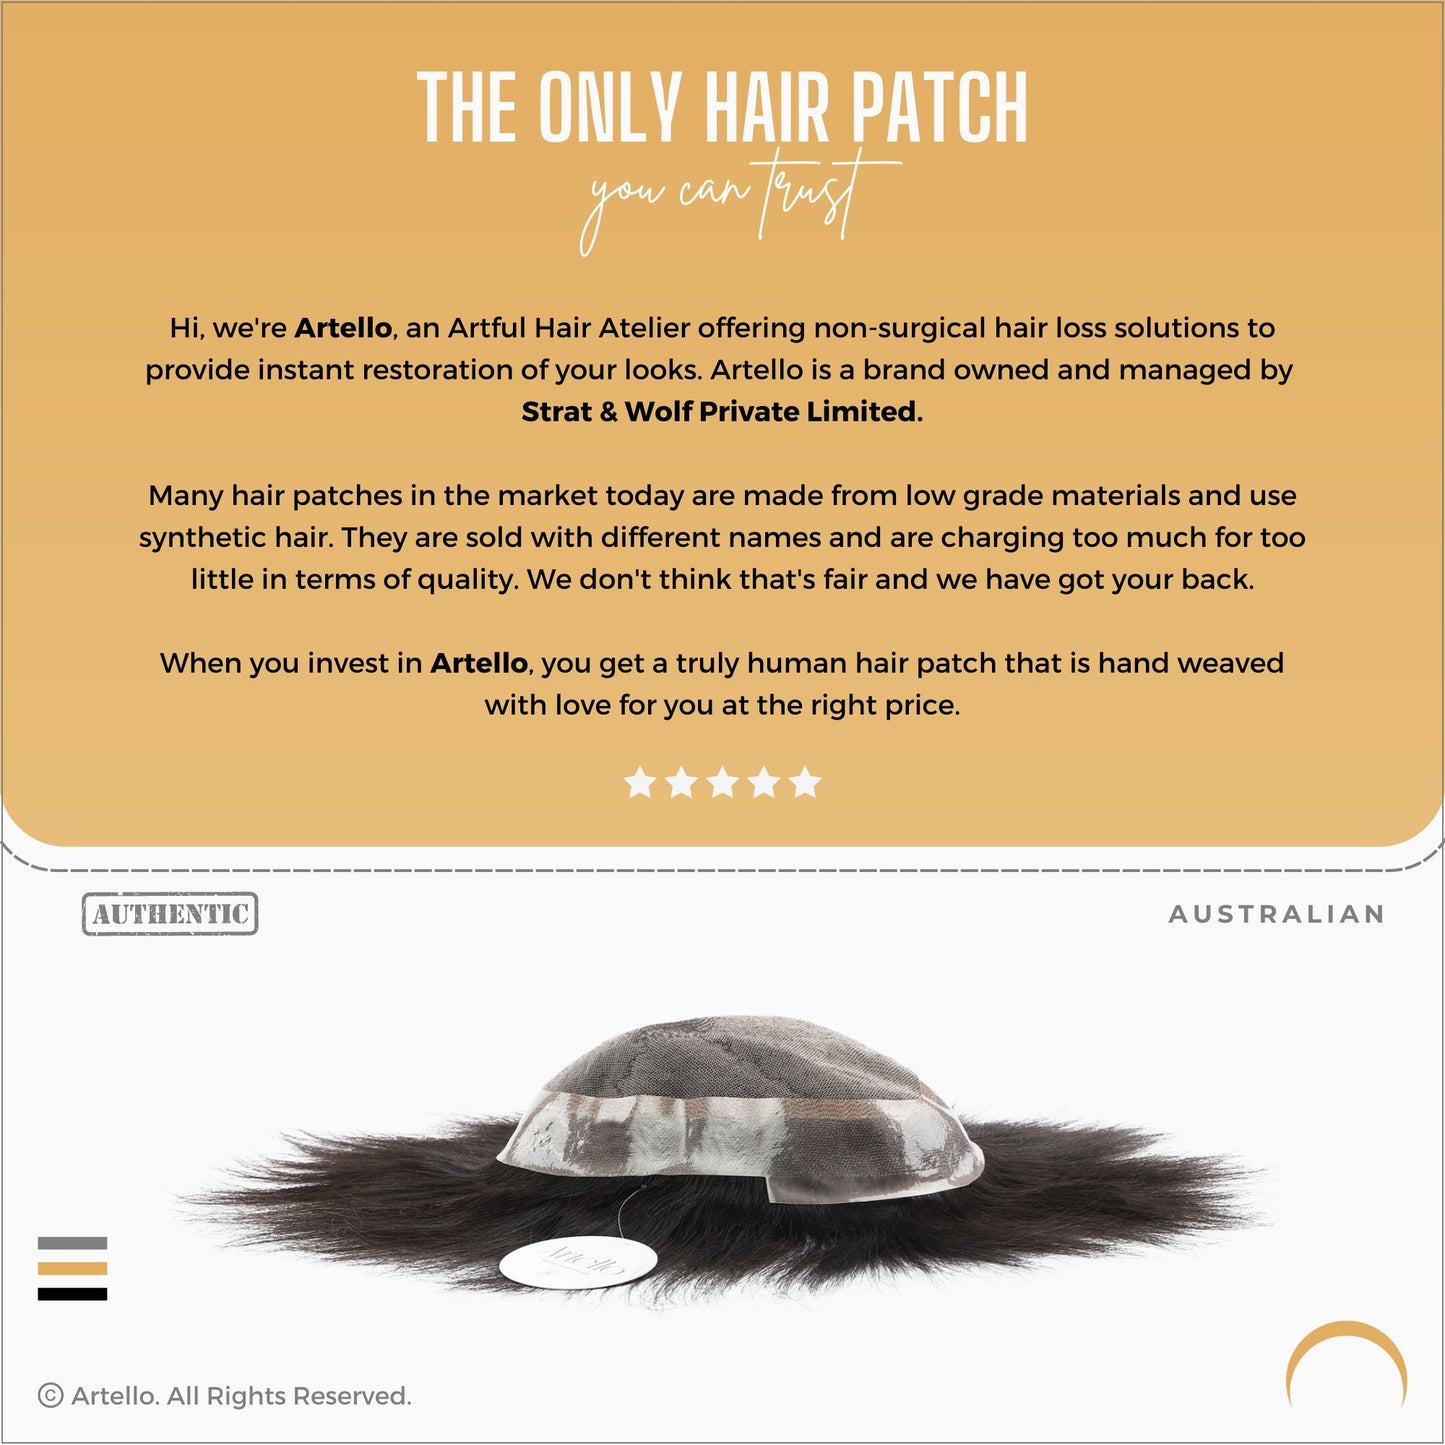 Artello AUSTRALIAN Ultra Thin Hair Patch for Men - Artello Hair Patch